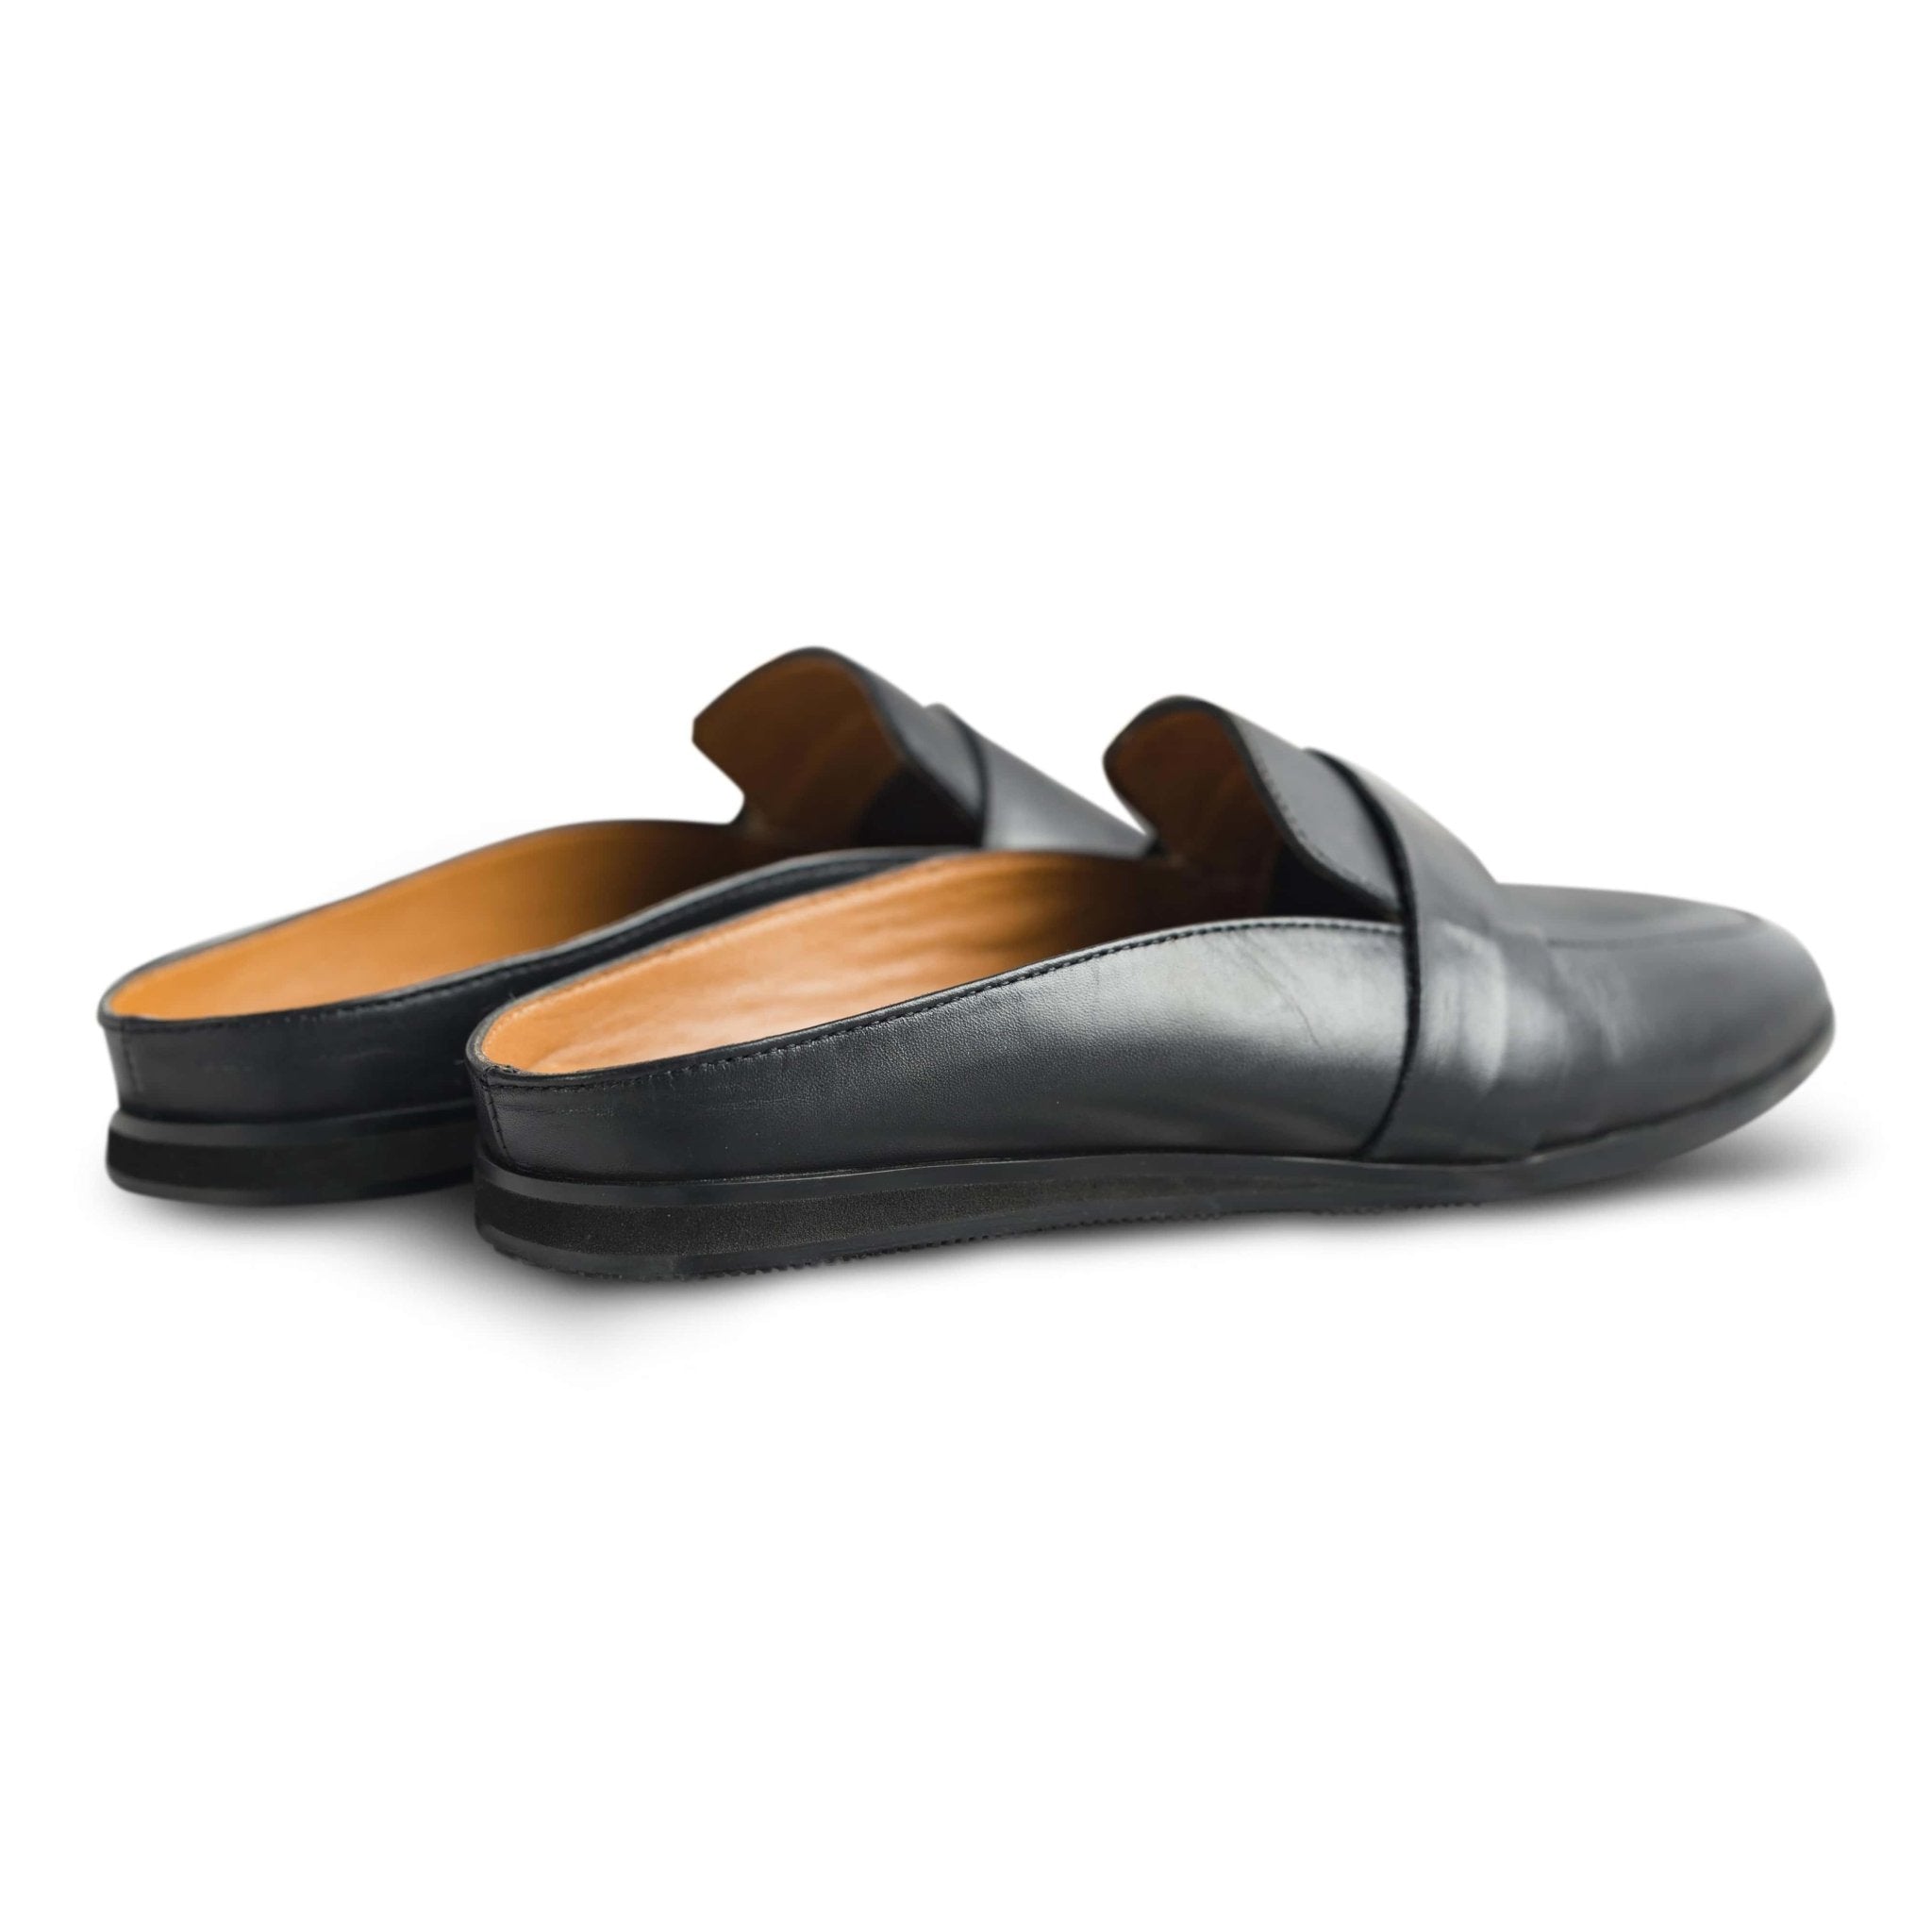 Super Leather Summer Shoes Men Fashion Sandals | Mens Dress Sandals Beach  Wedding - Men's Sandals - Aliexpress